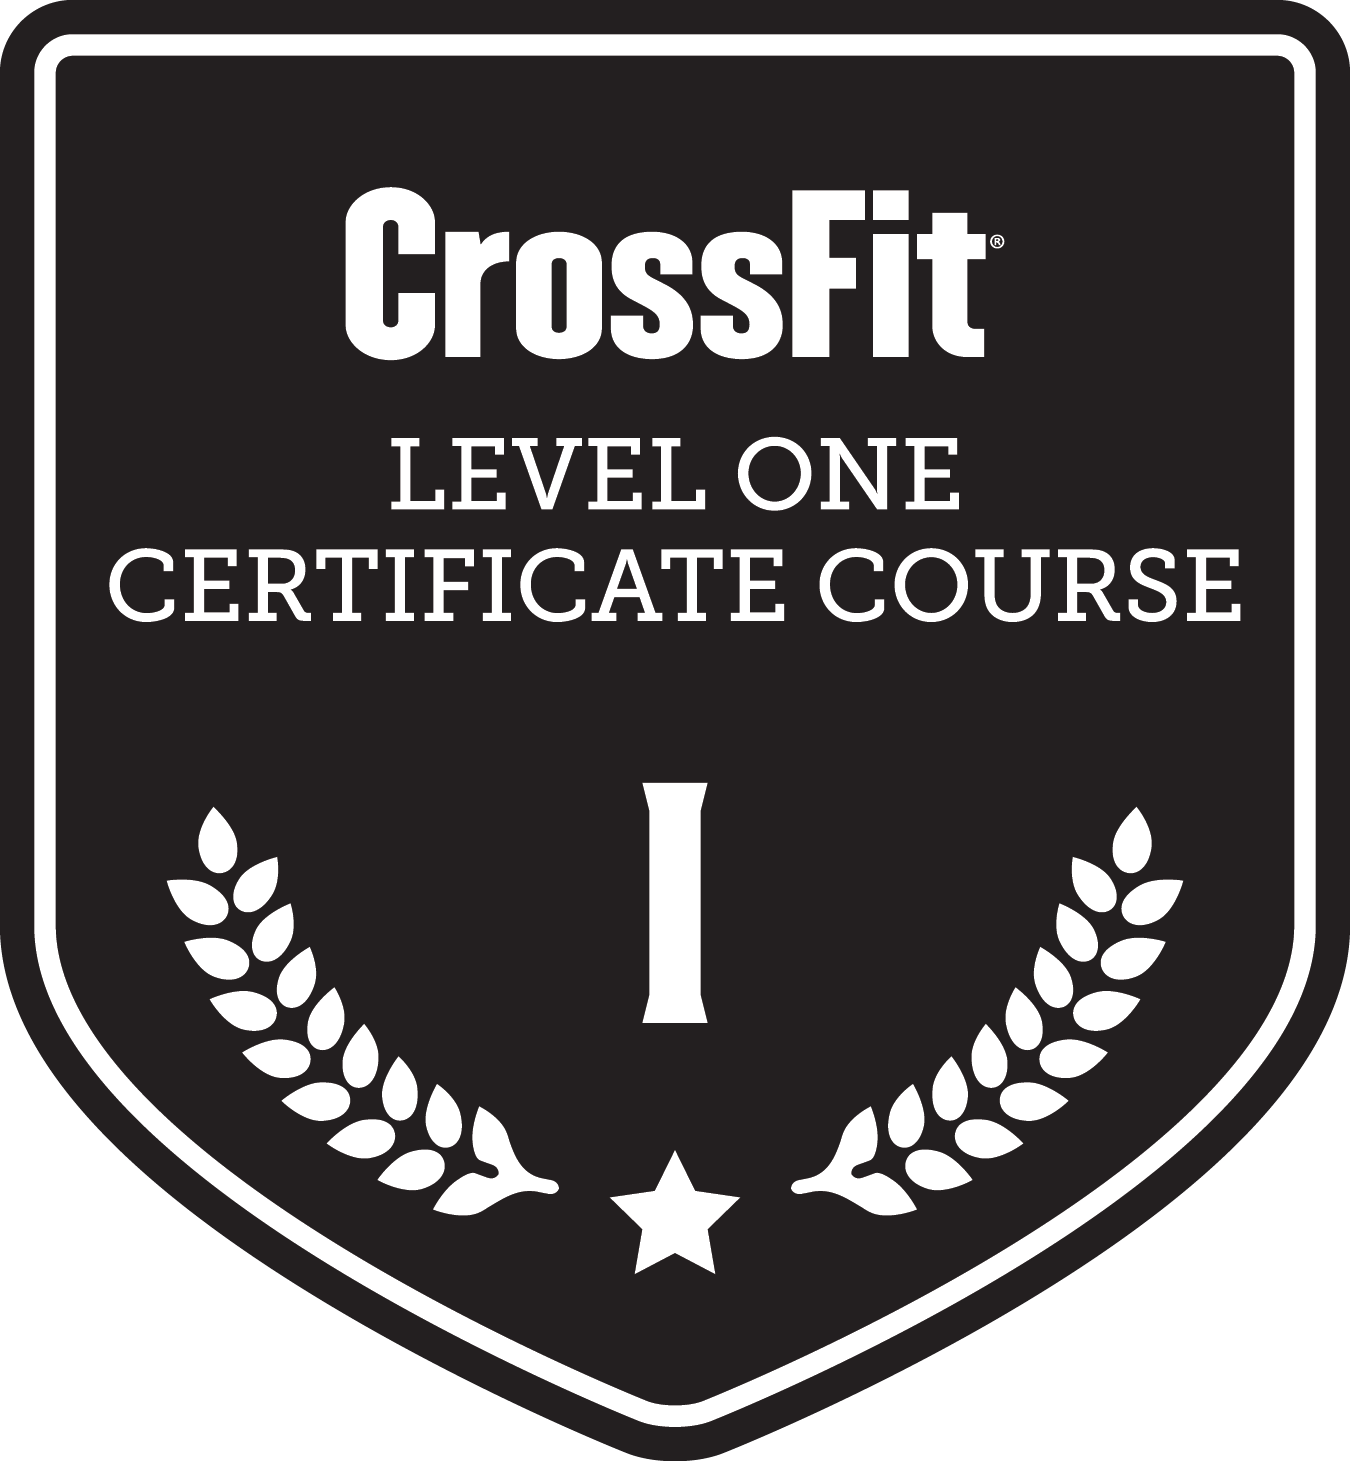 CrossFit Level 1 Certificate Course